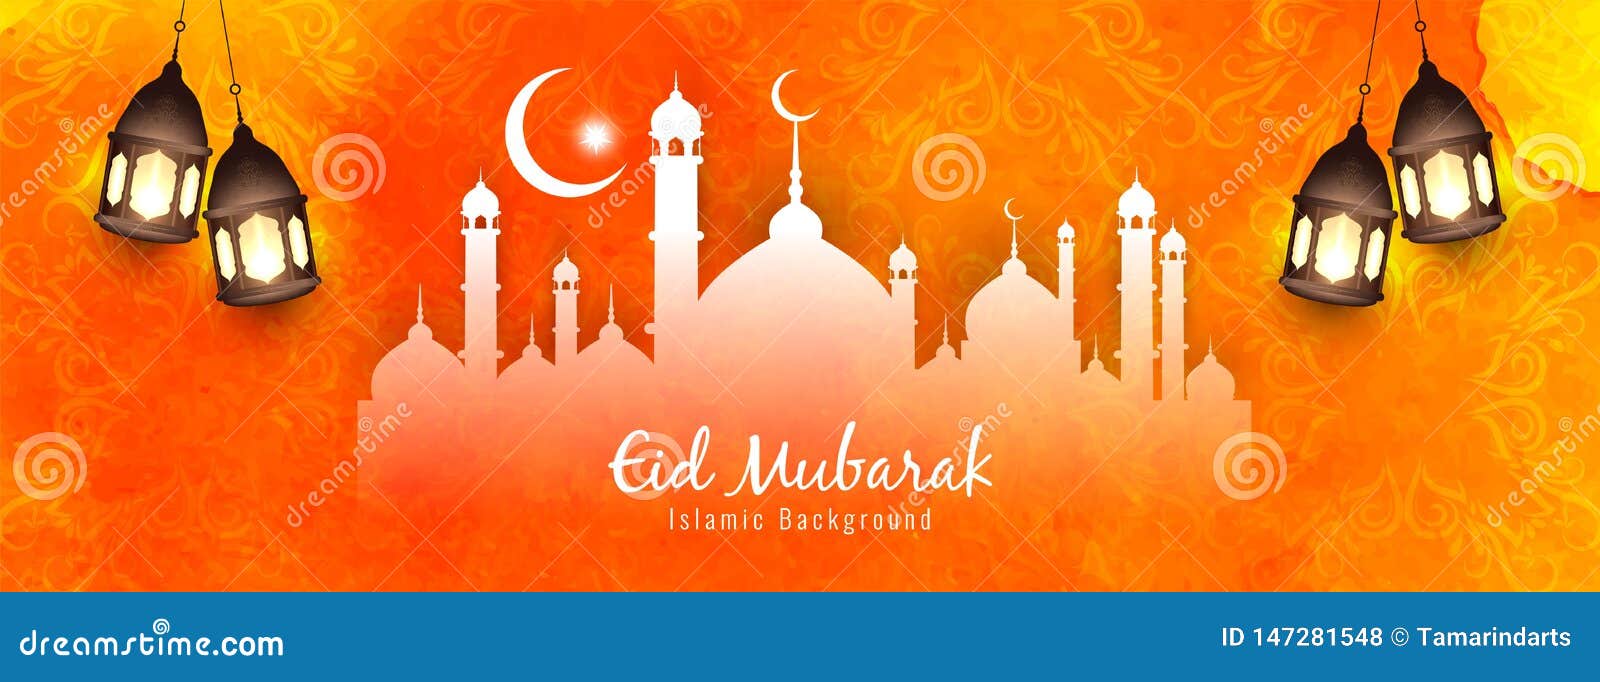 Abstract Religious Eid Mubarak Banner Design Stock Vector - Illustration of  banner, background: 147281548